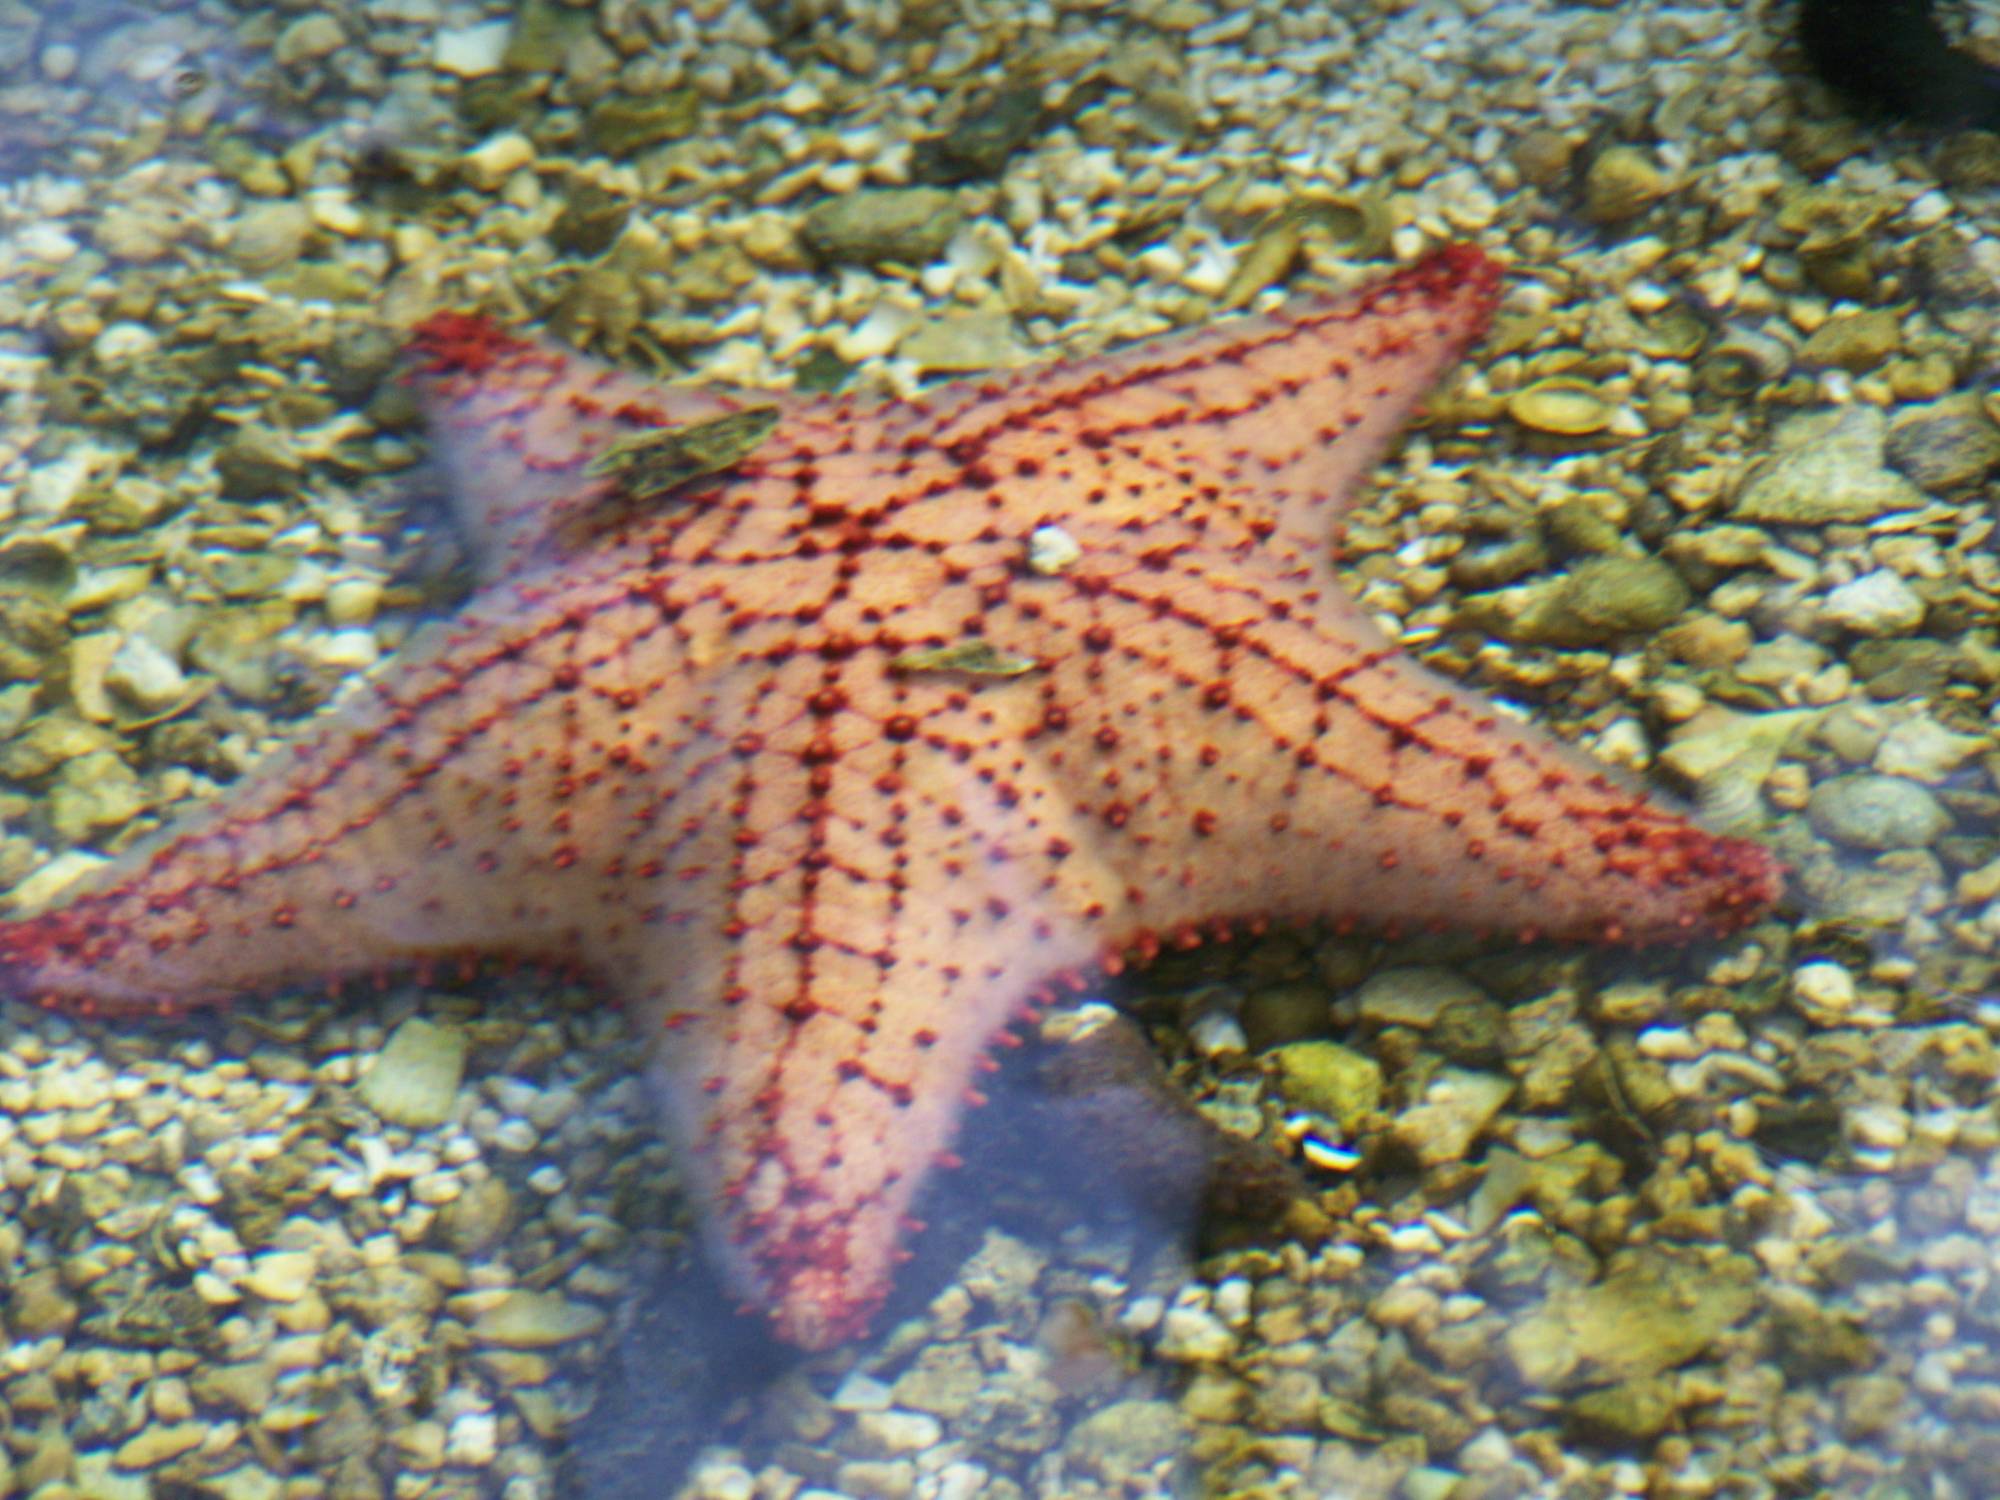 Starfish at the Key West Aquarium